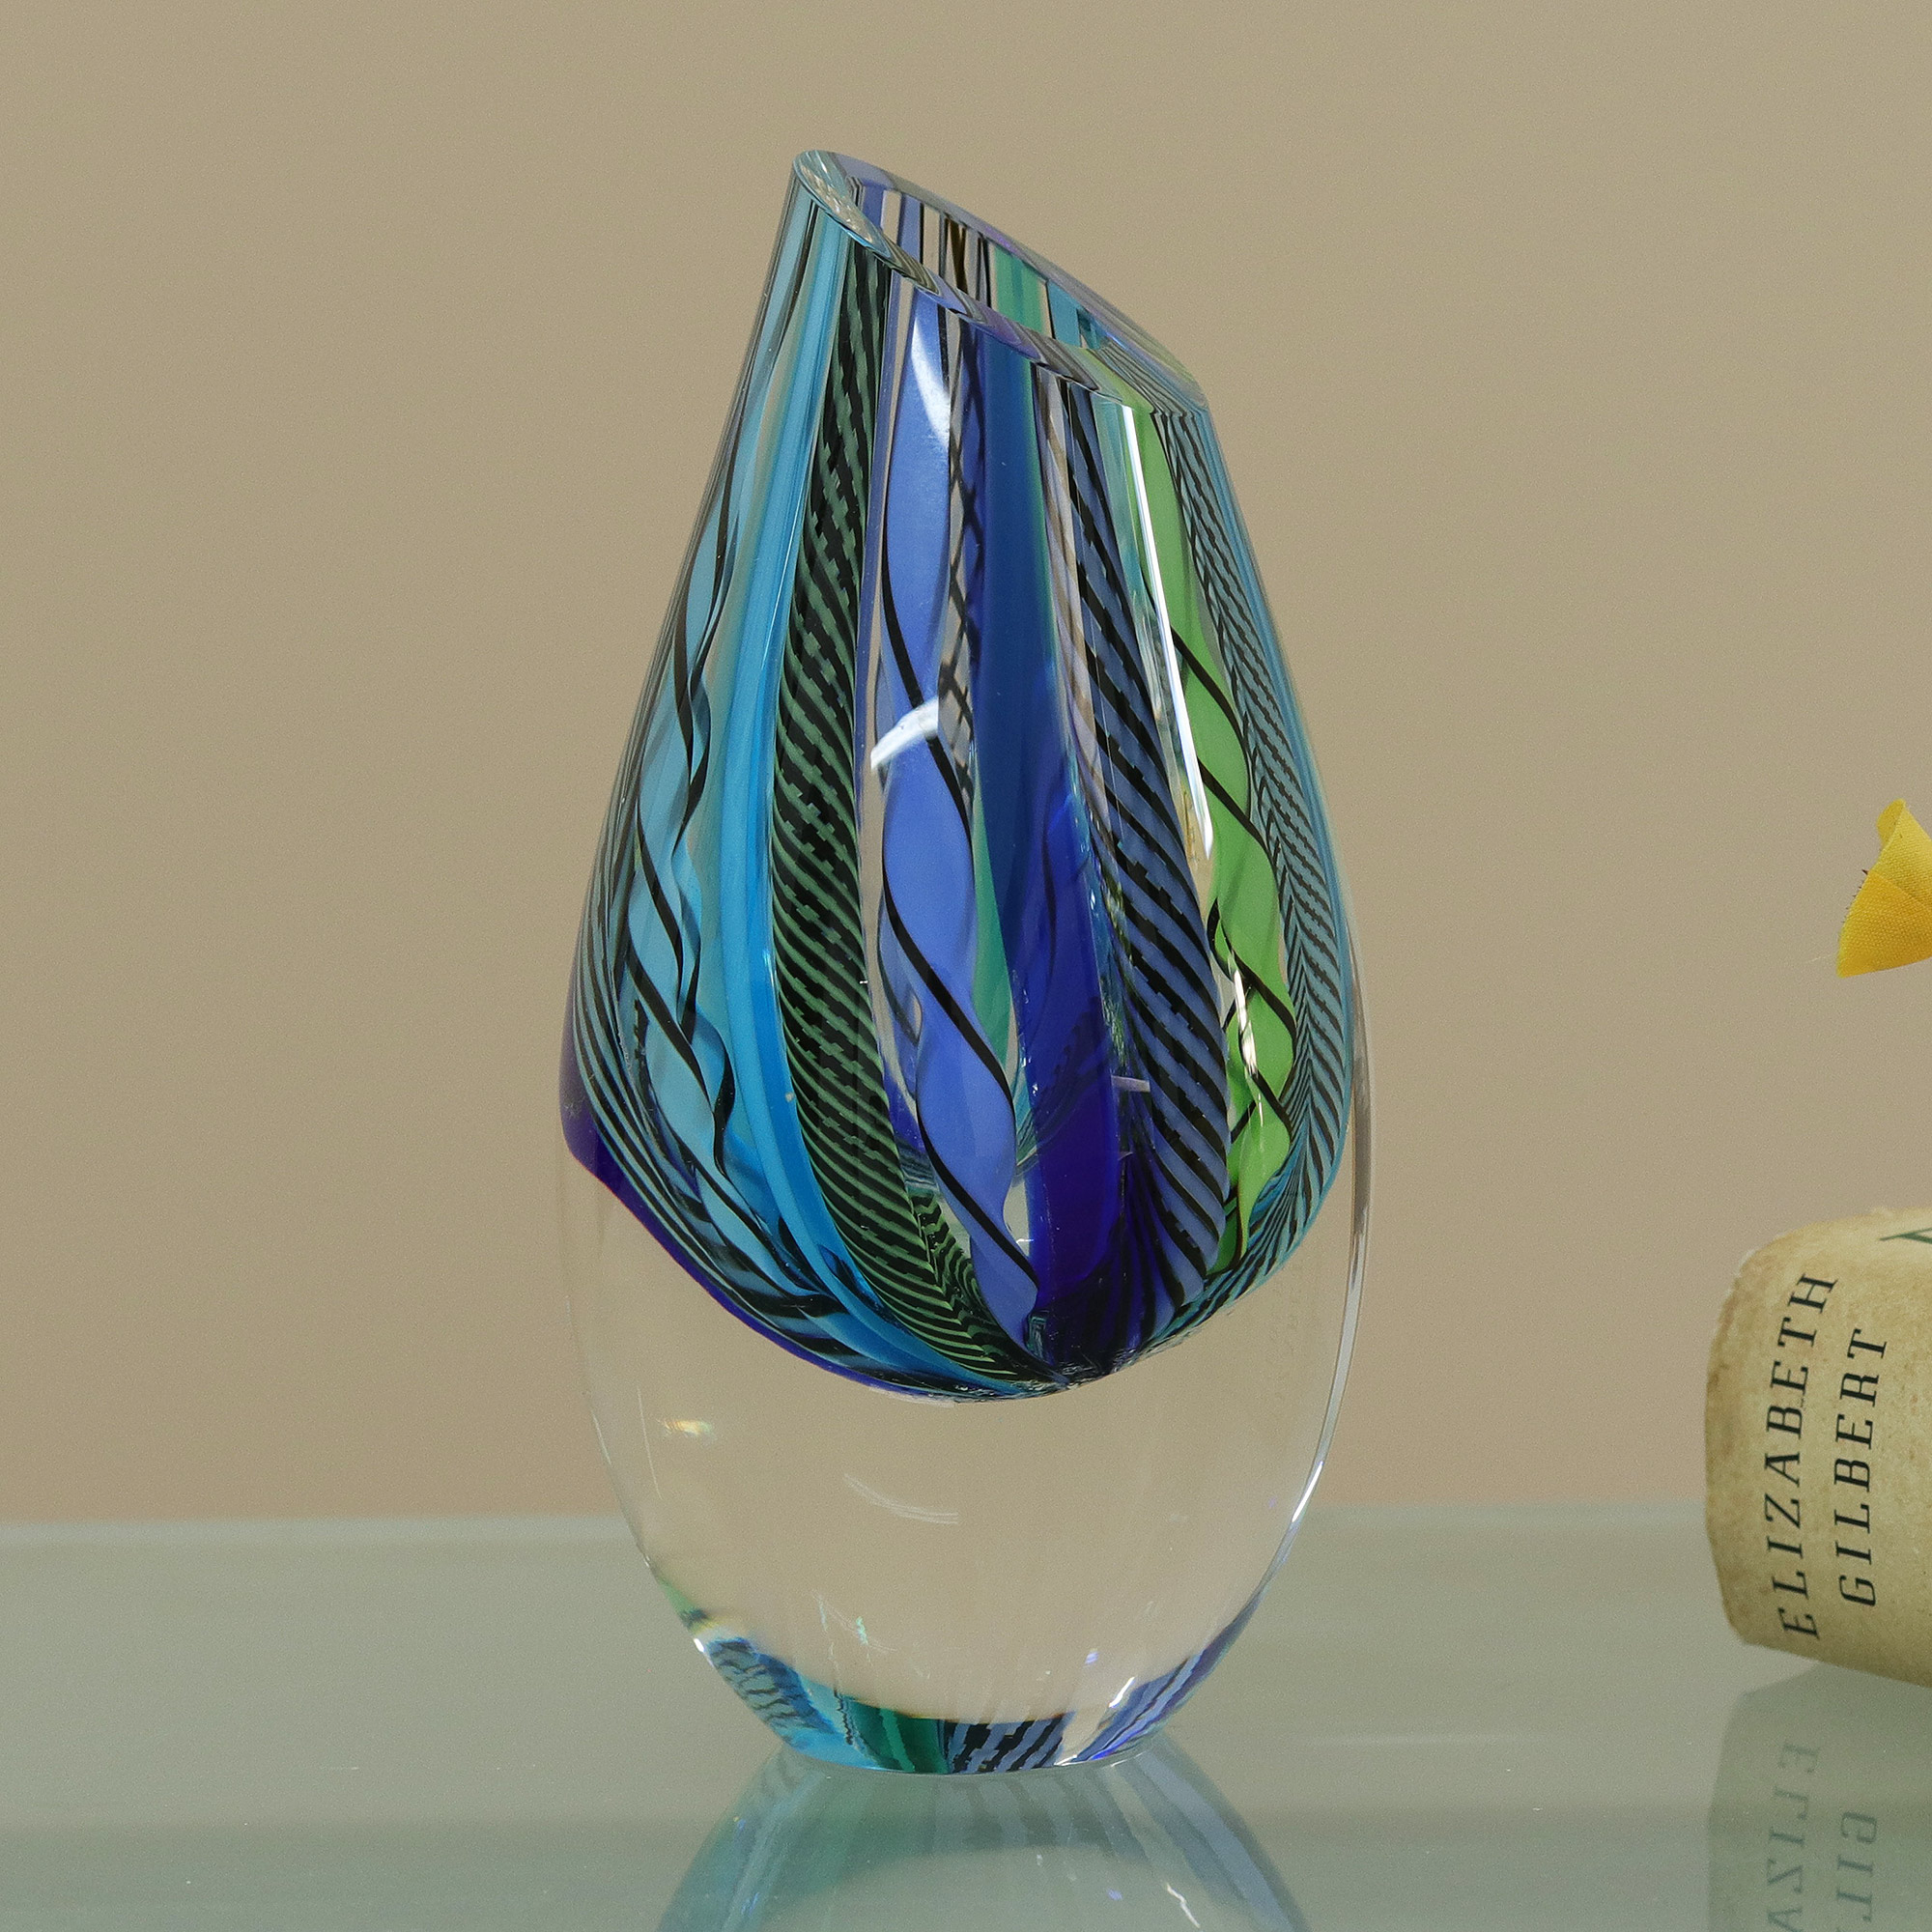 Caprice Green and Aqua Art Glass, Art Glass Awards